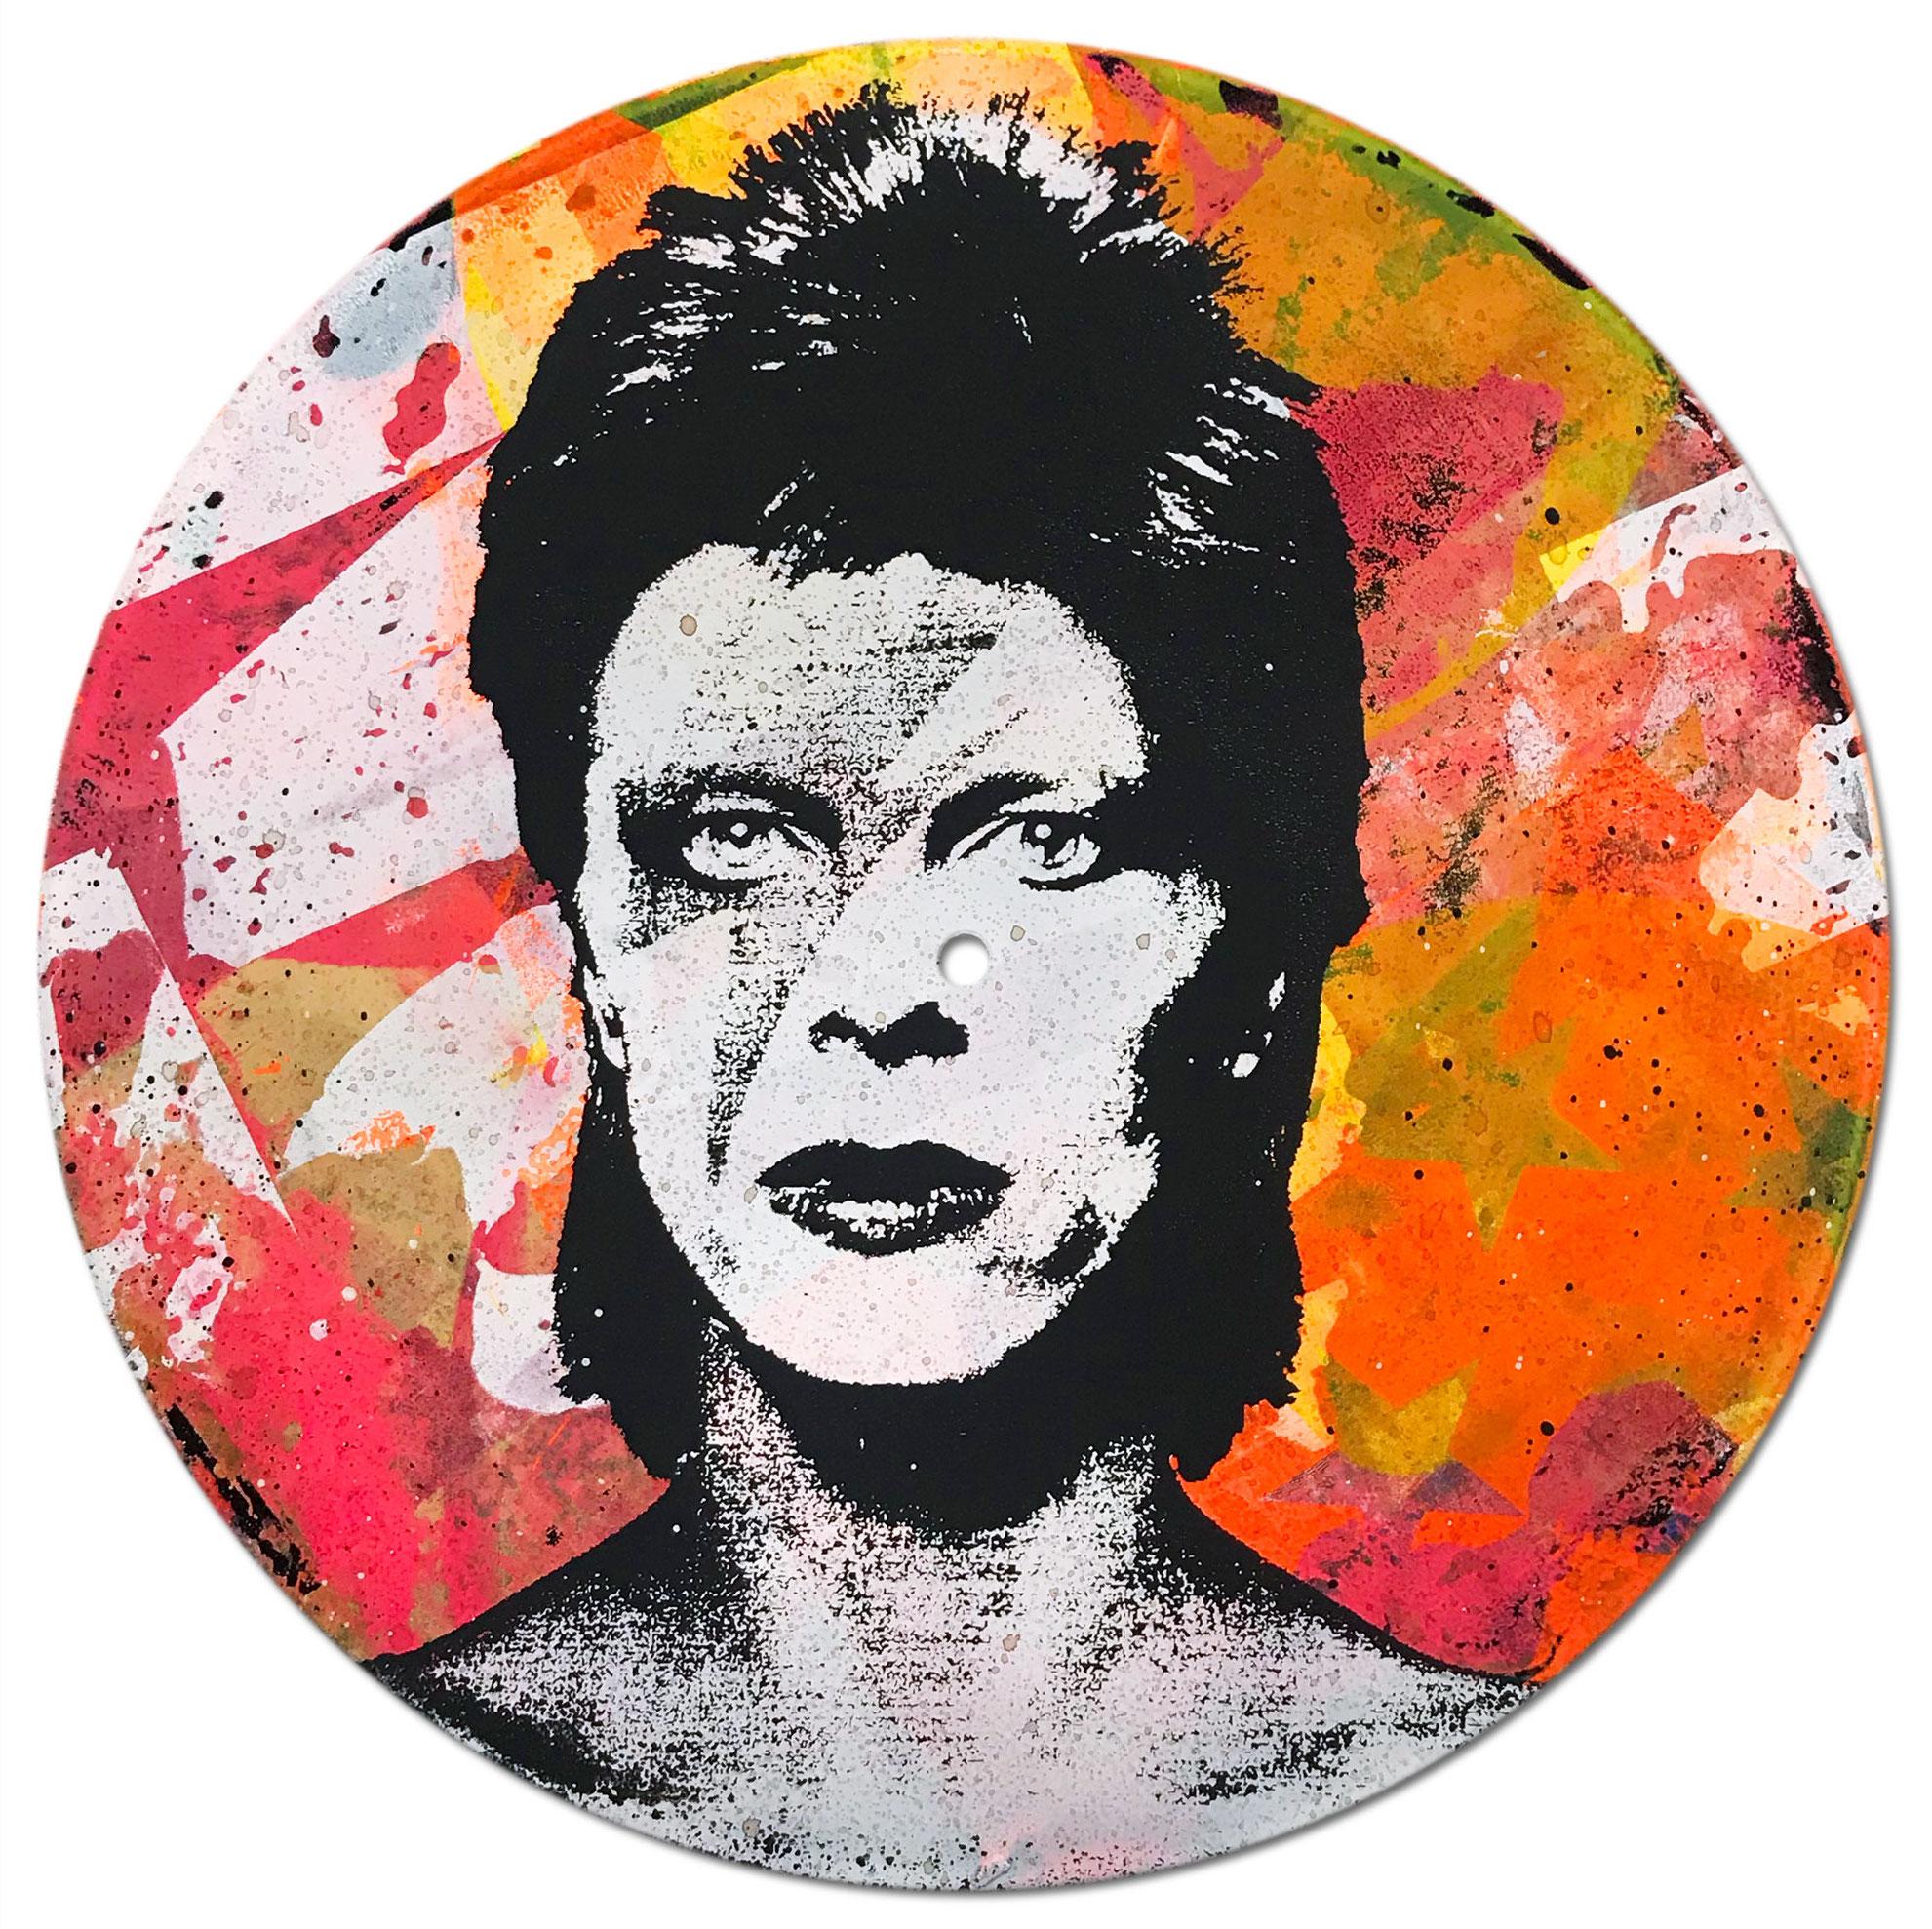 David Bowie Vinyl 1-10, Greg Gossel Pop Art LP Record (Singles & Sets Available) For Sale 3